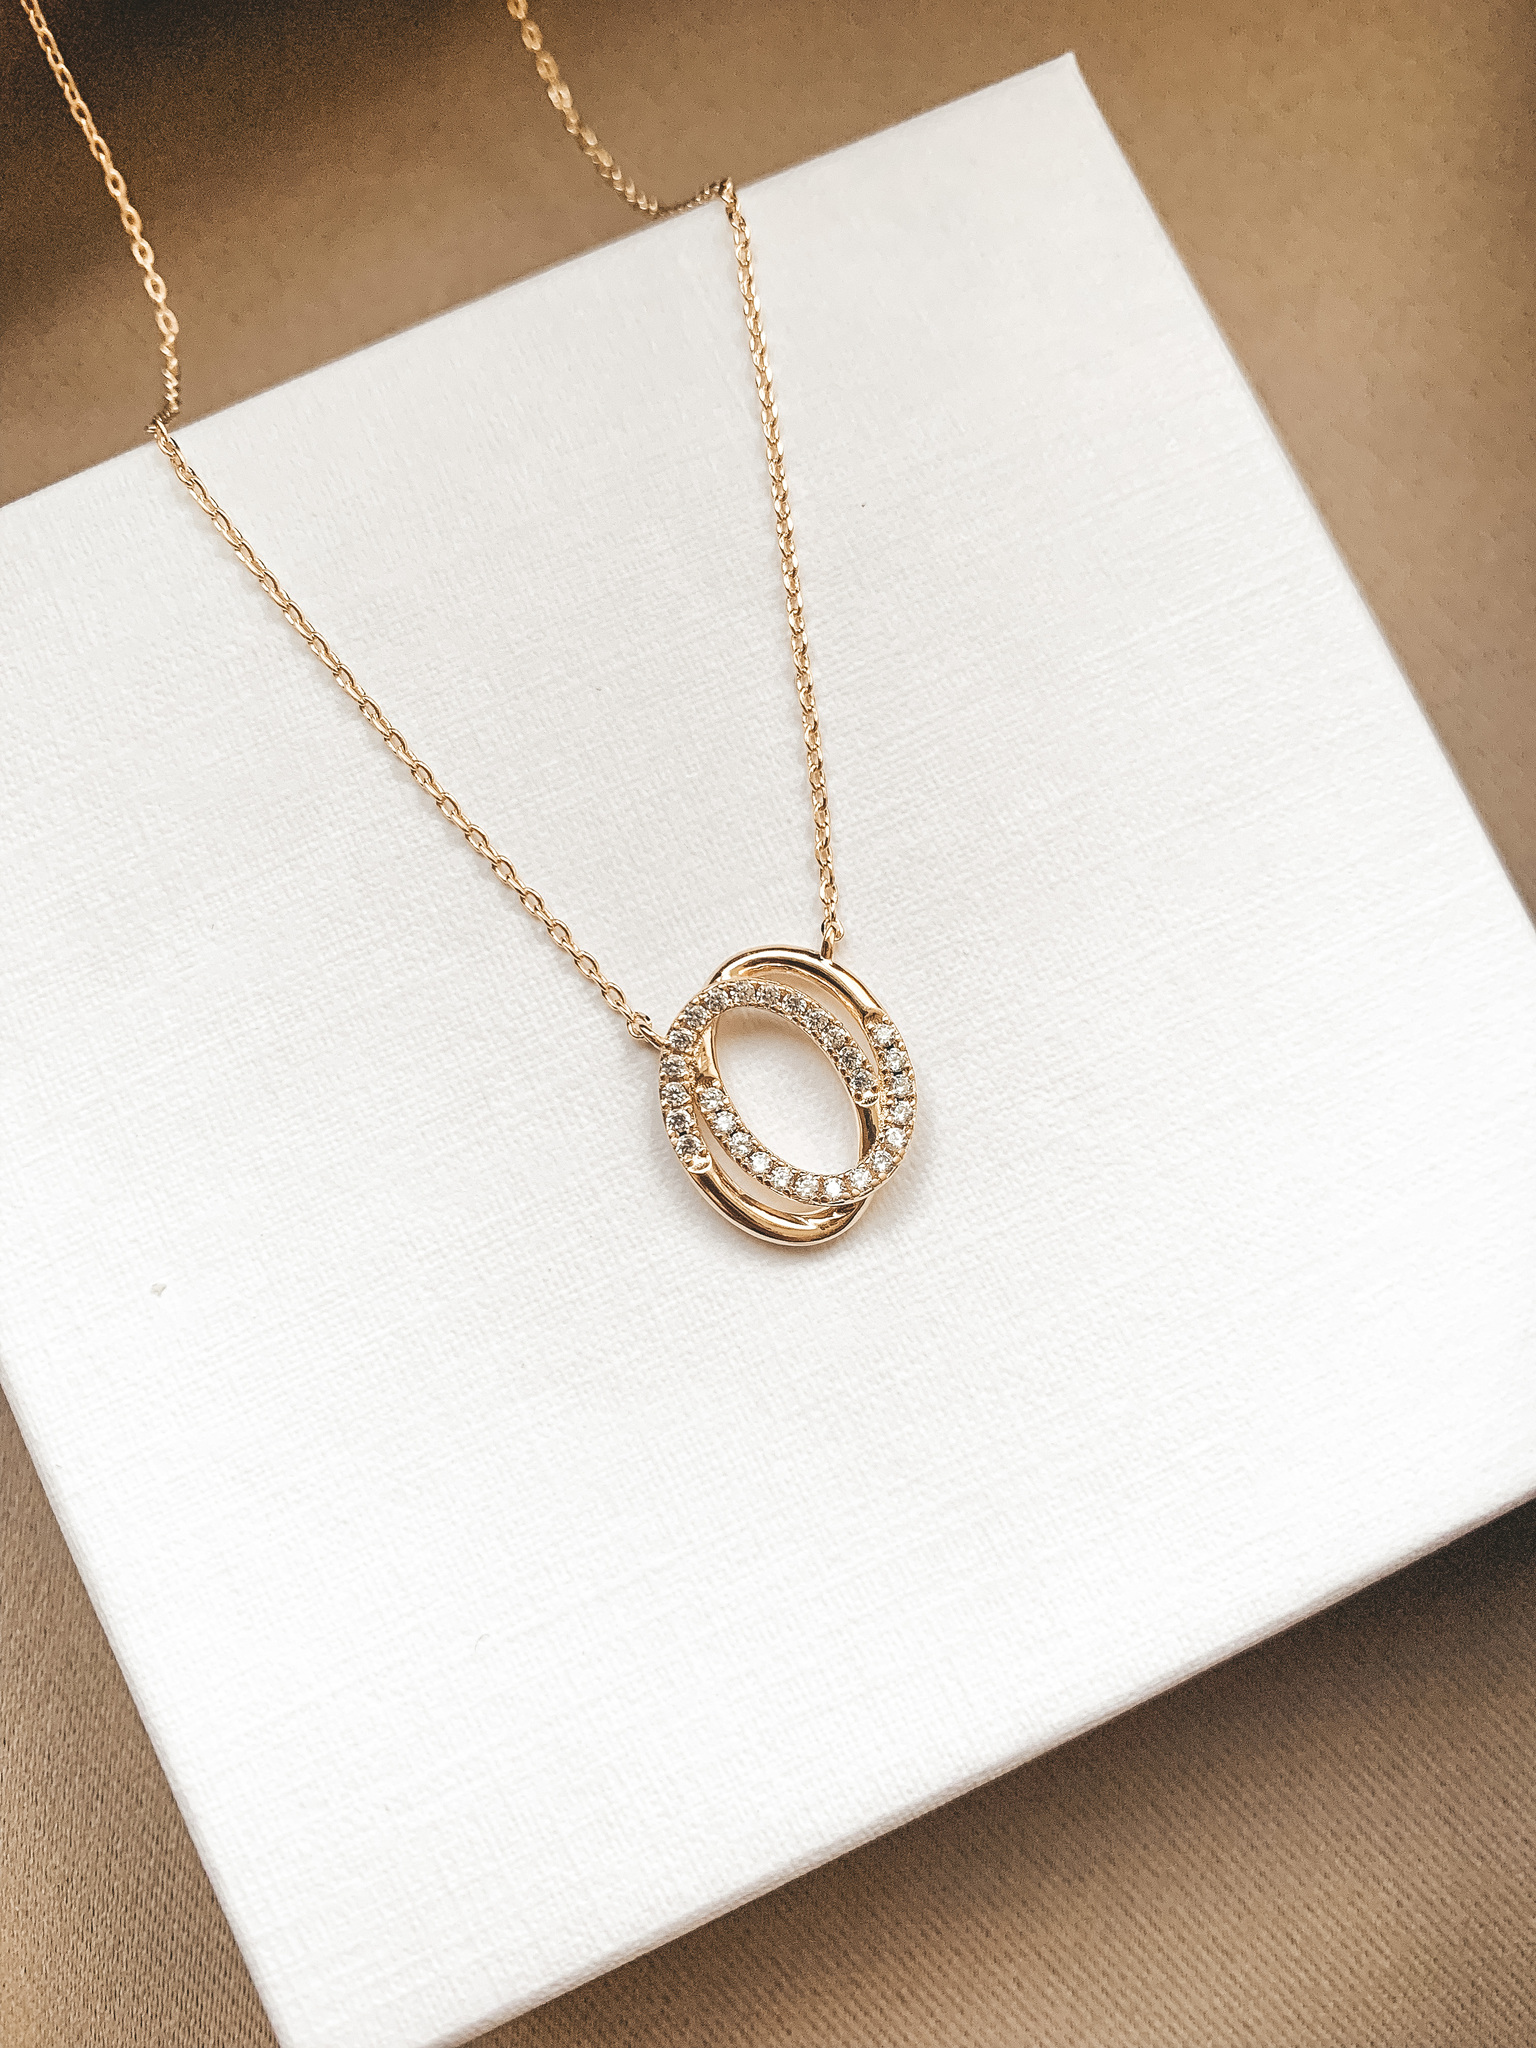 Circle of Paris Necklace Gold